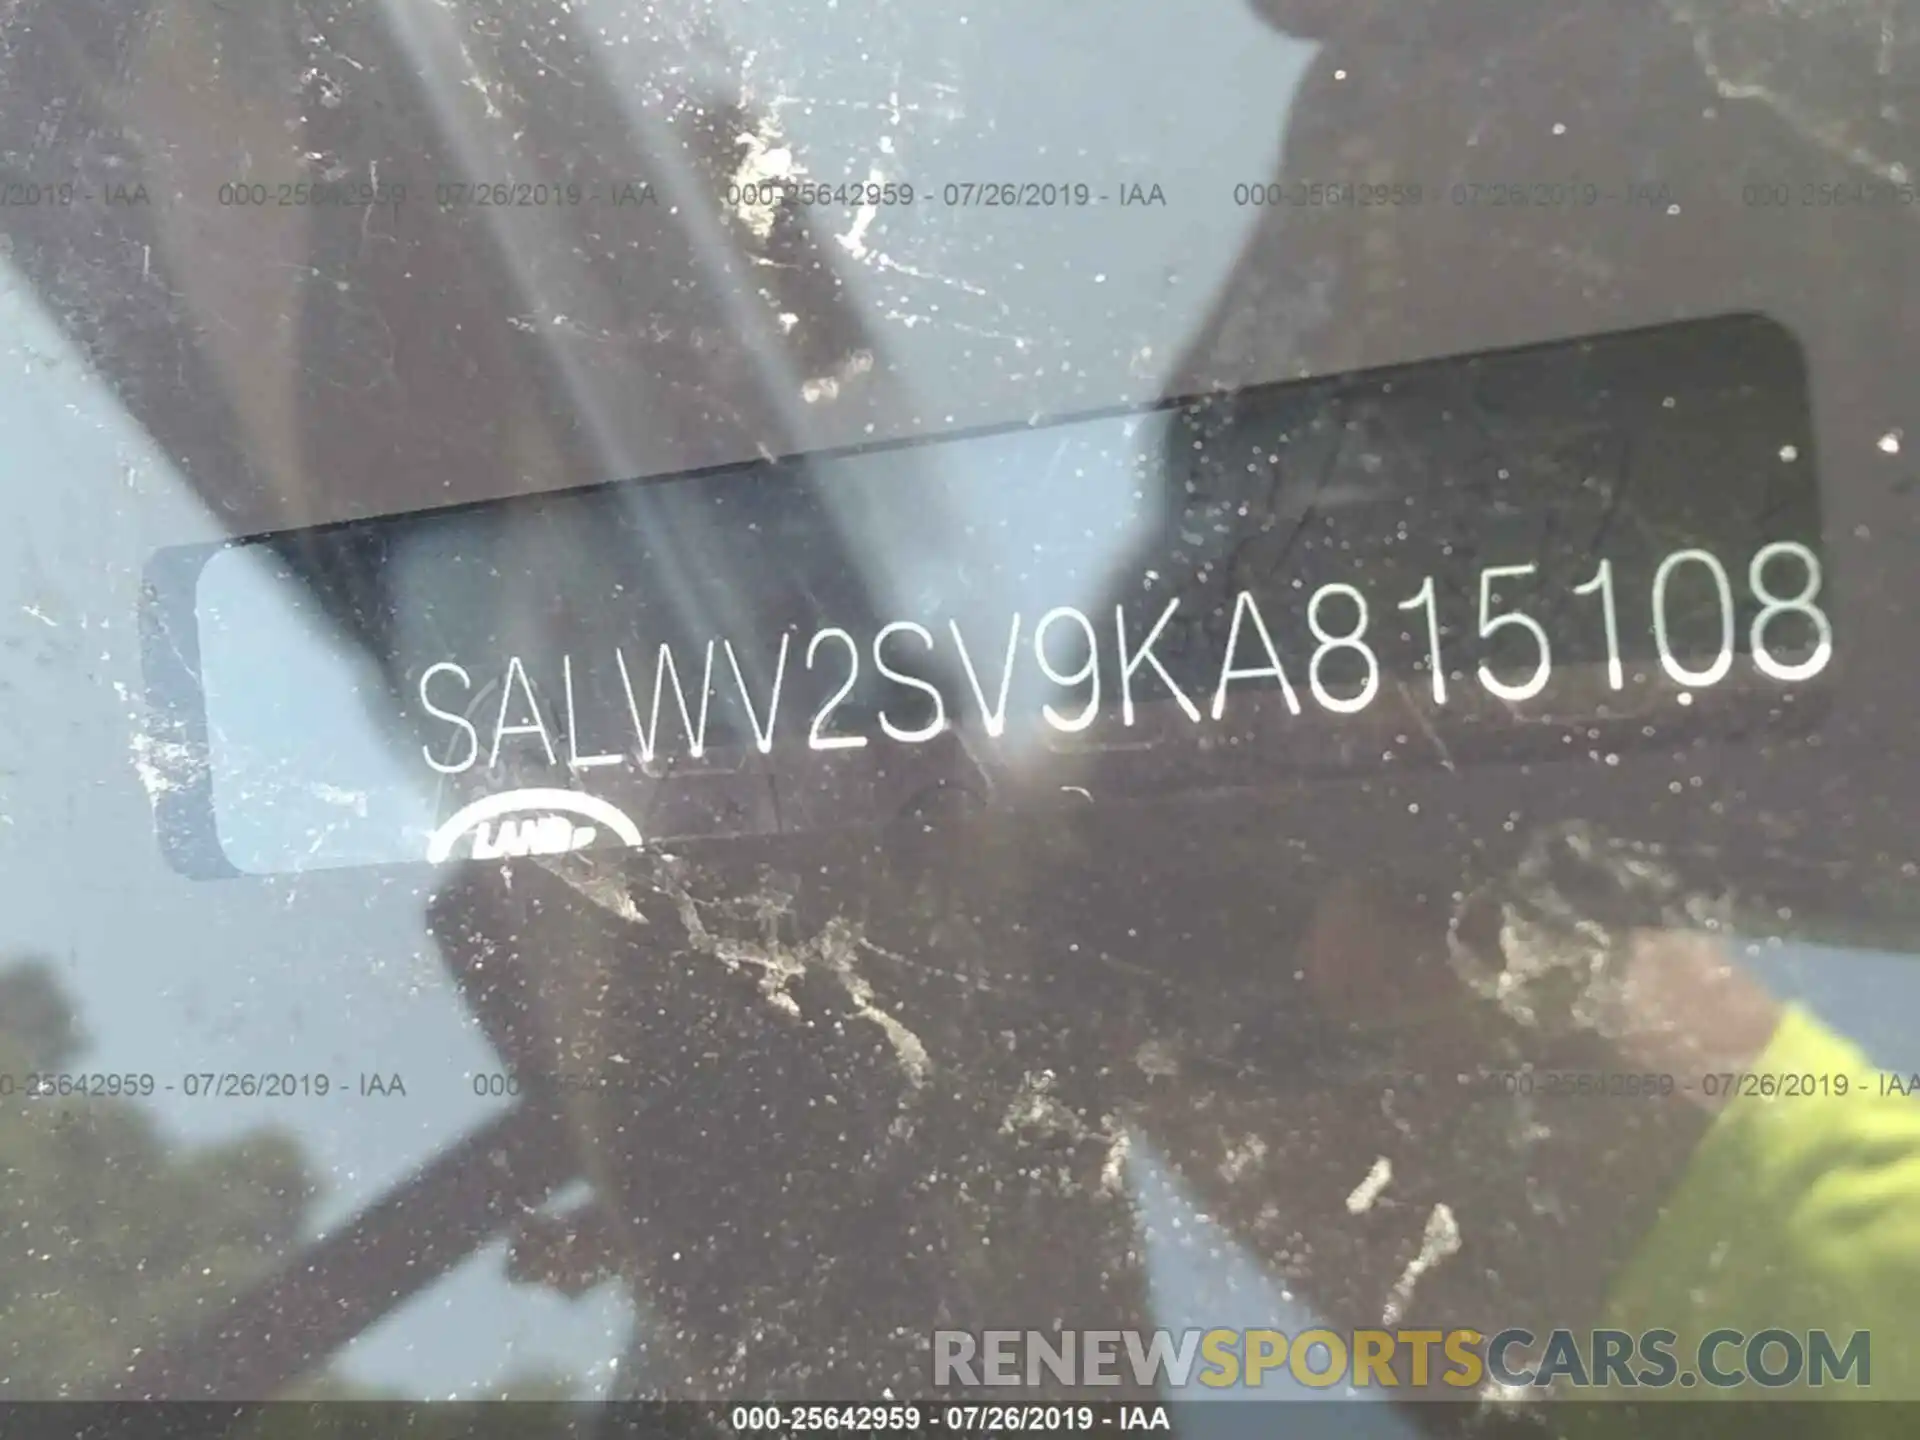 9 Photograph of a damaged car SALWV2SV9KA815108 LAND ROVER RANGE ROVER SPORT 2019